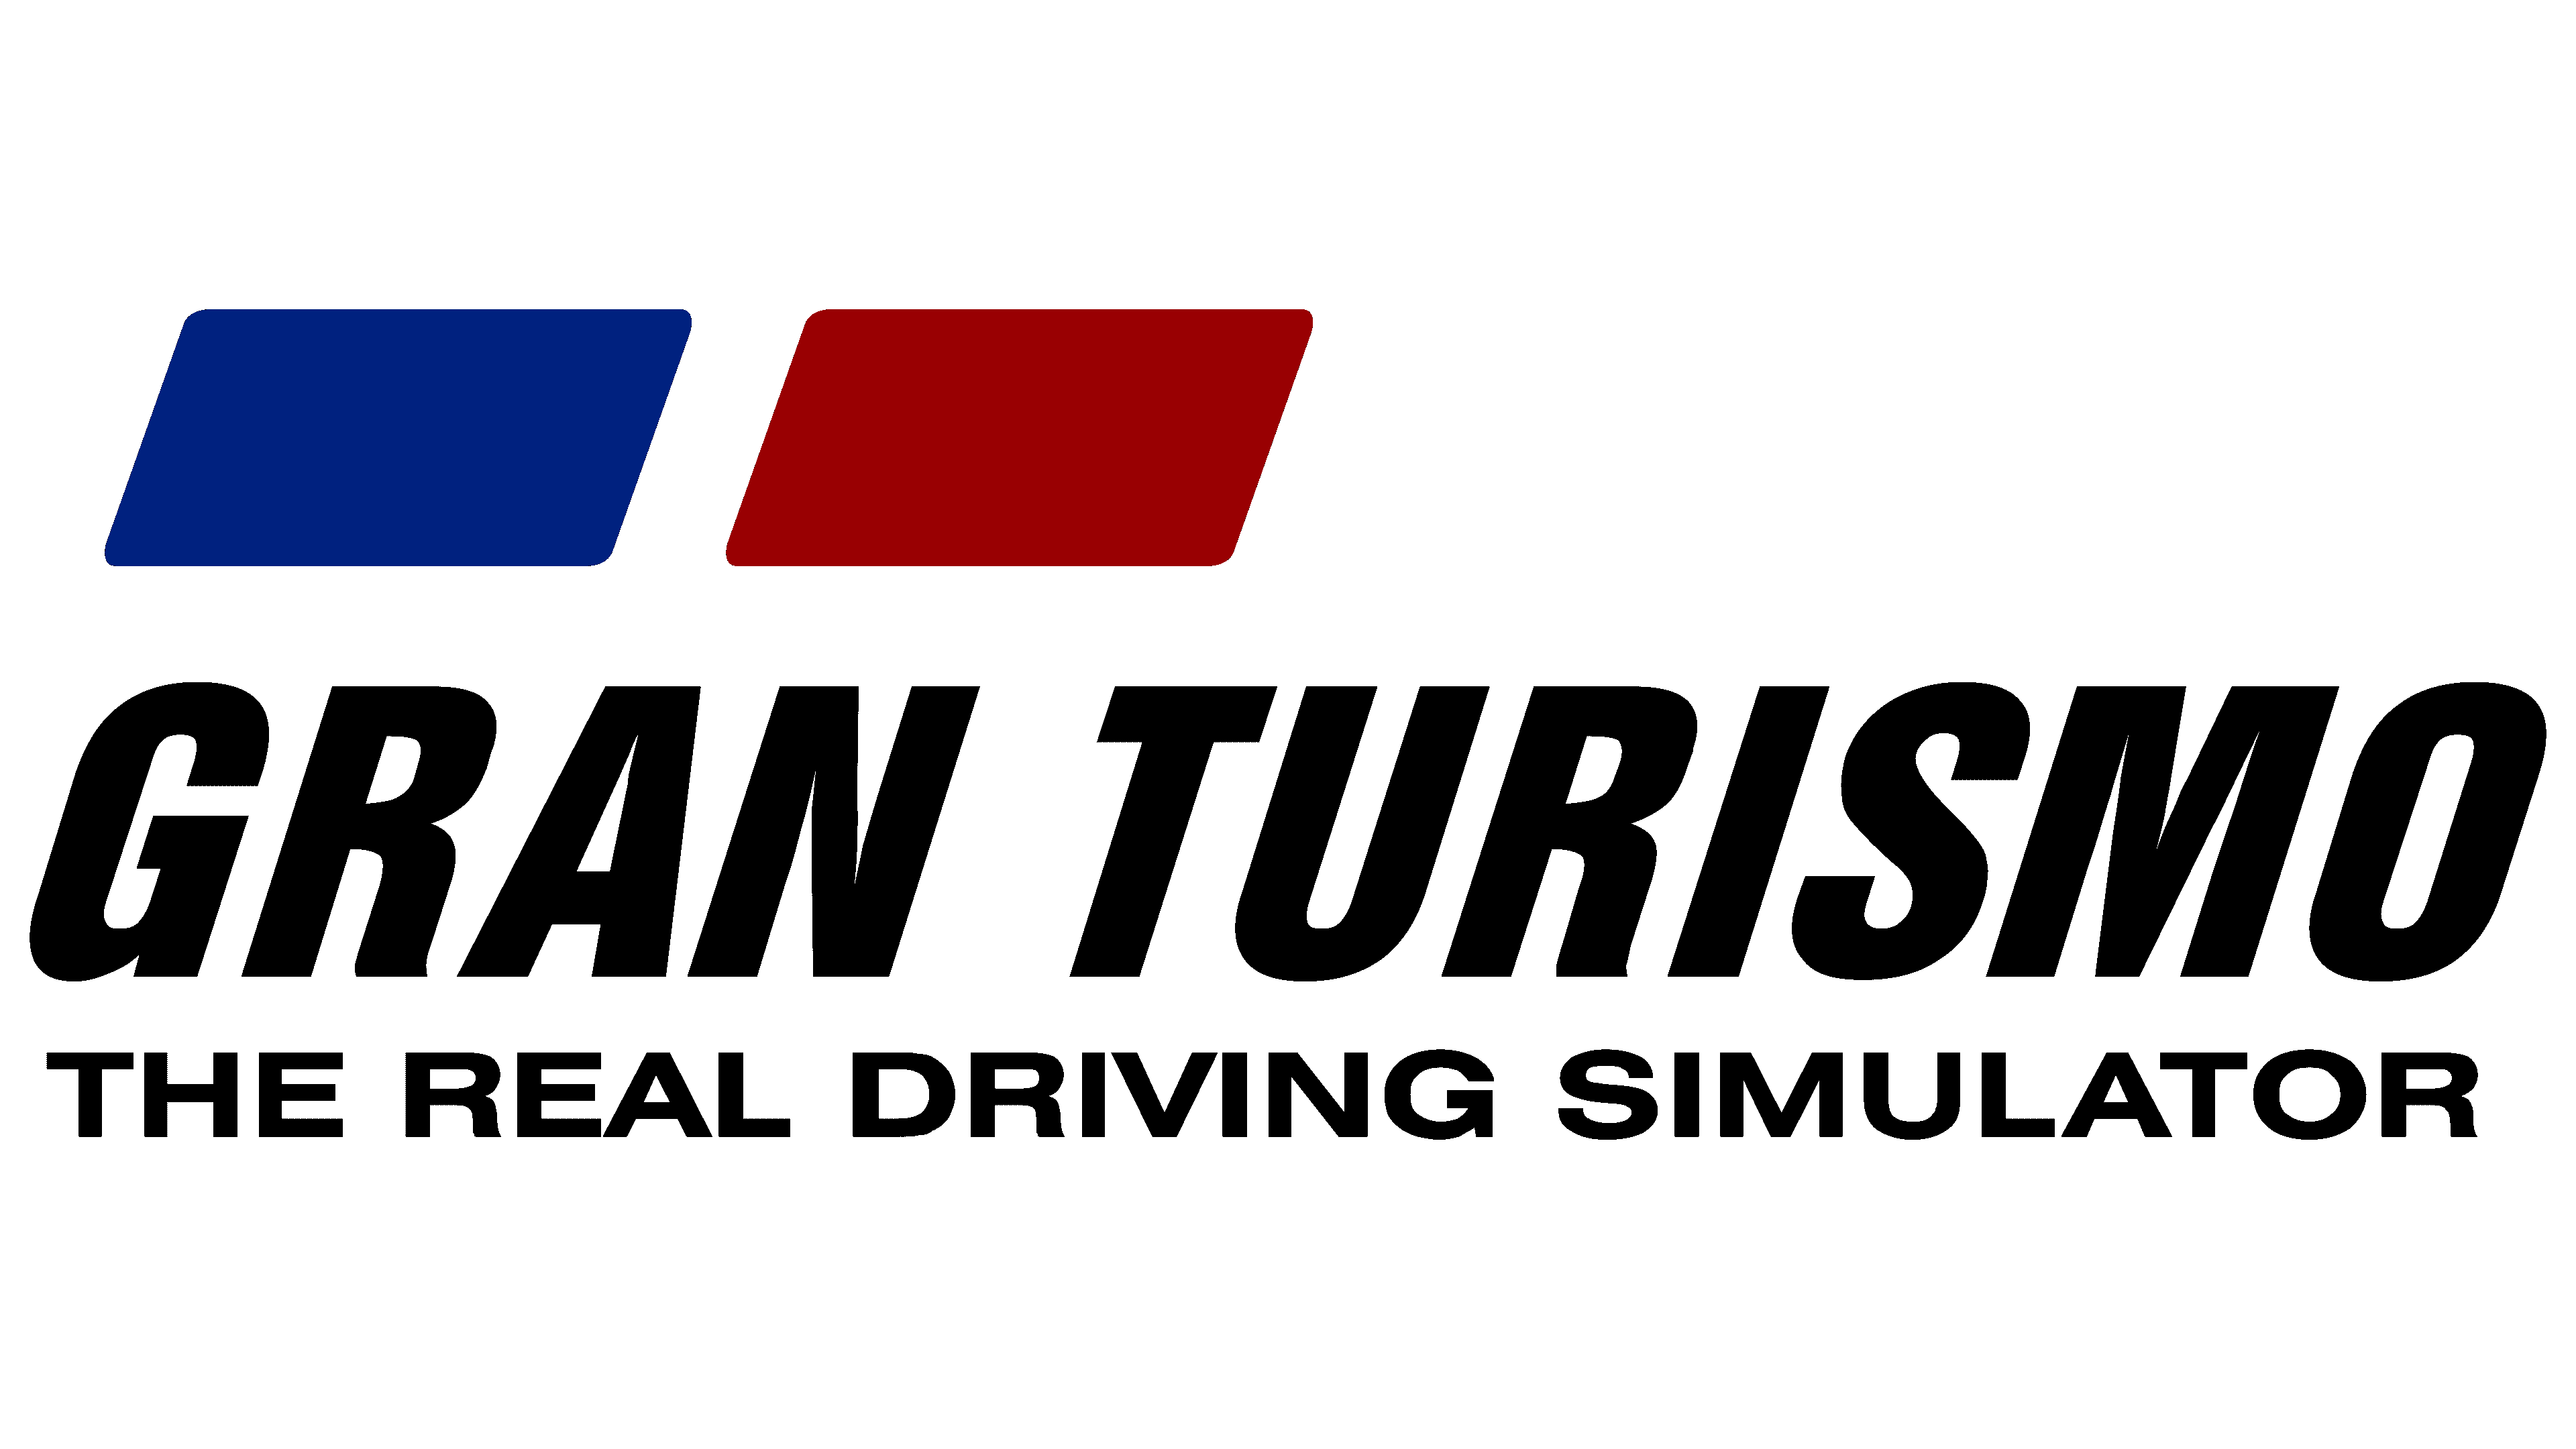 Gran Turismo 7 logo